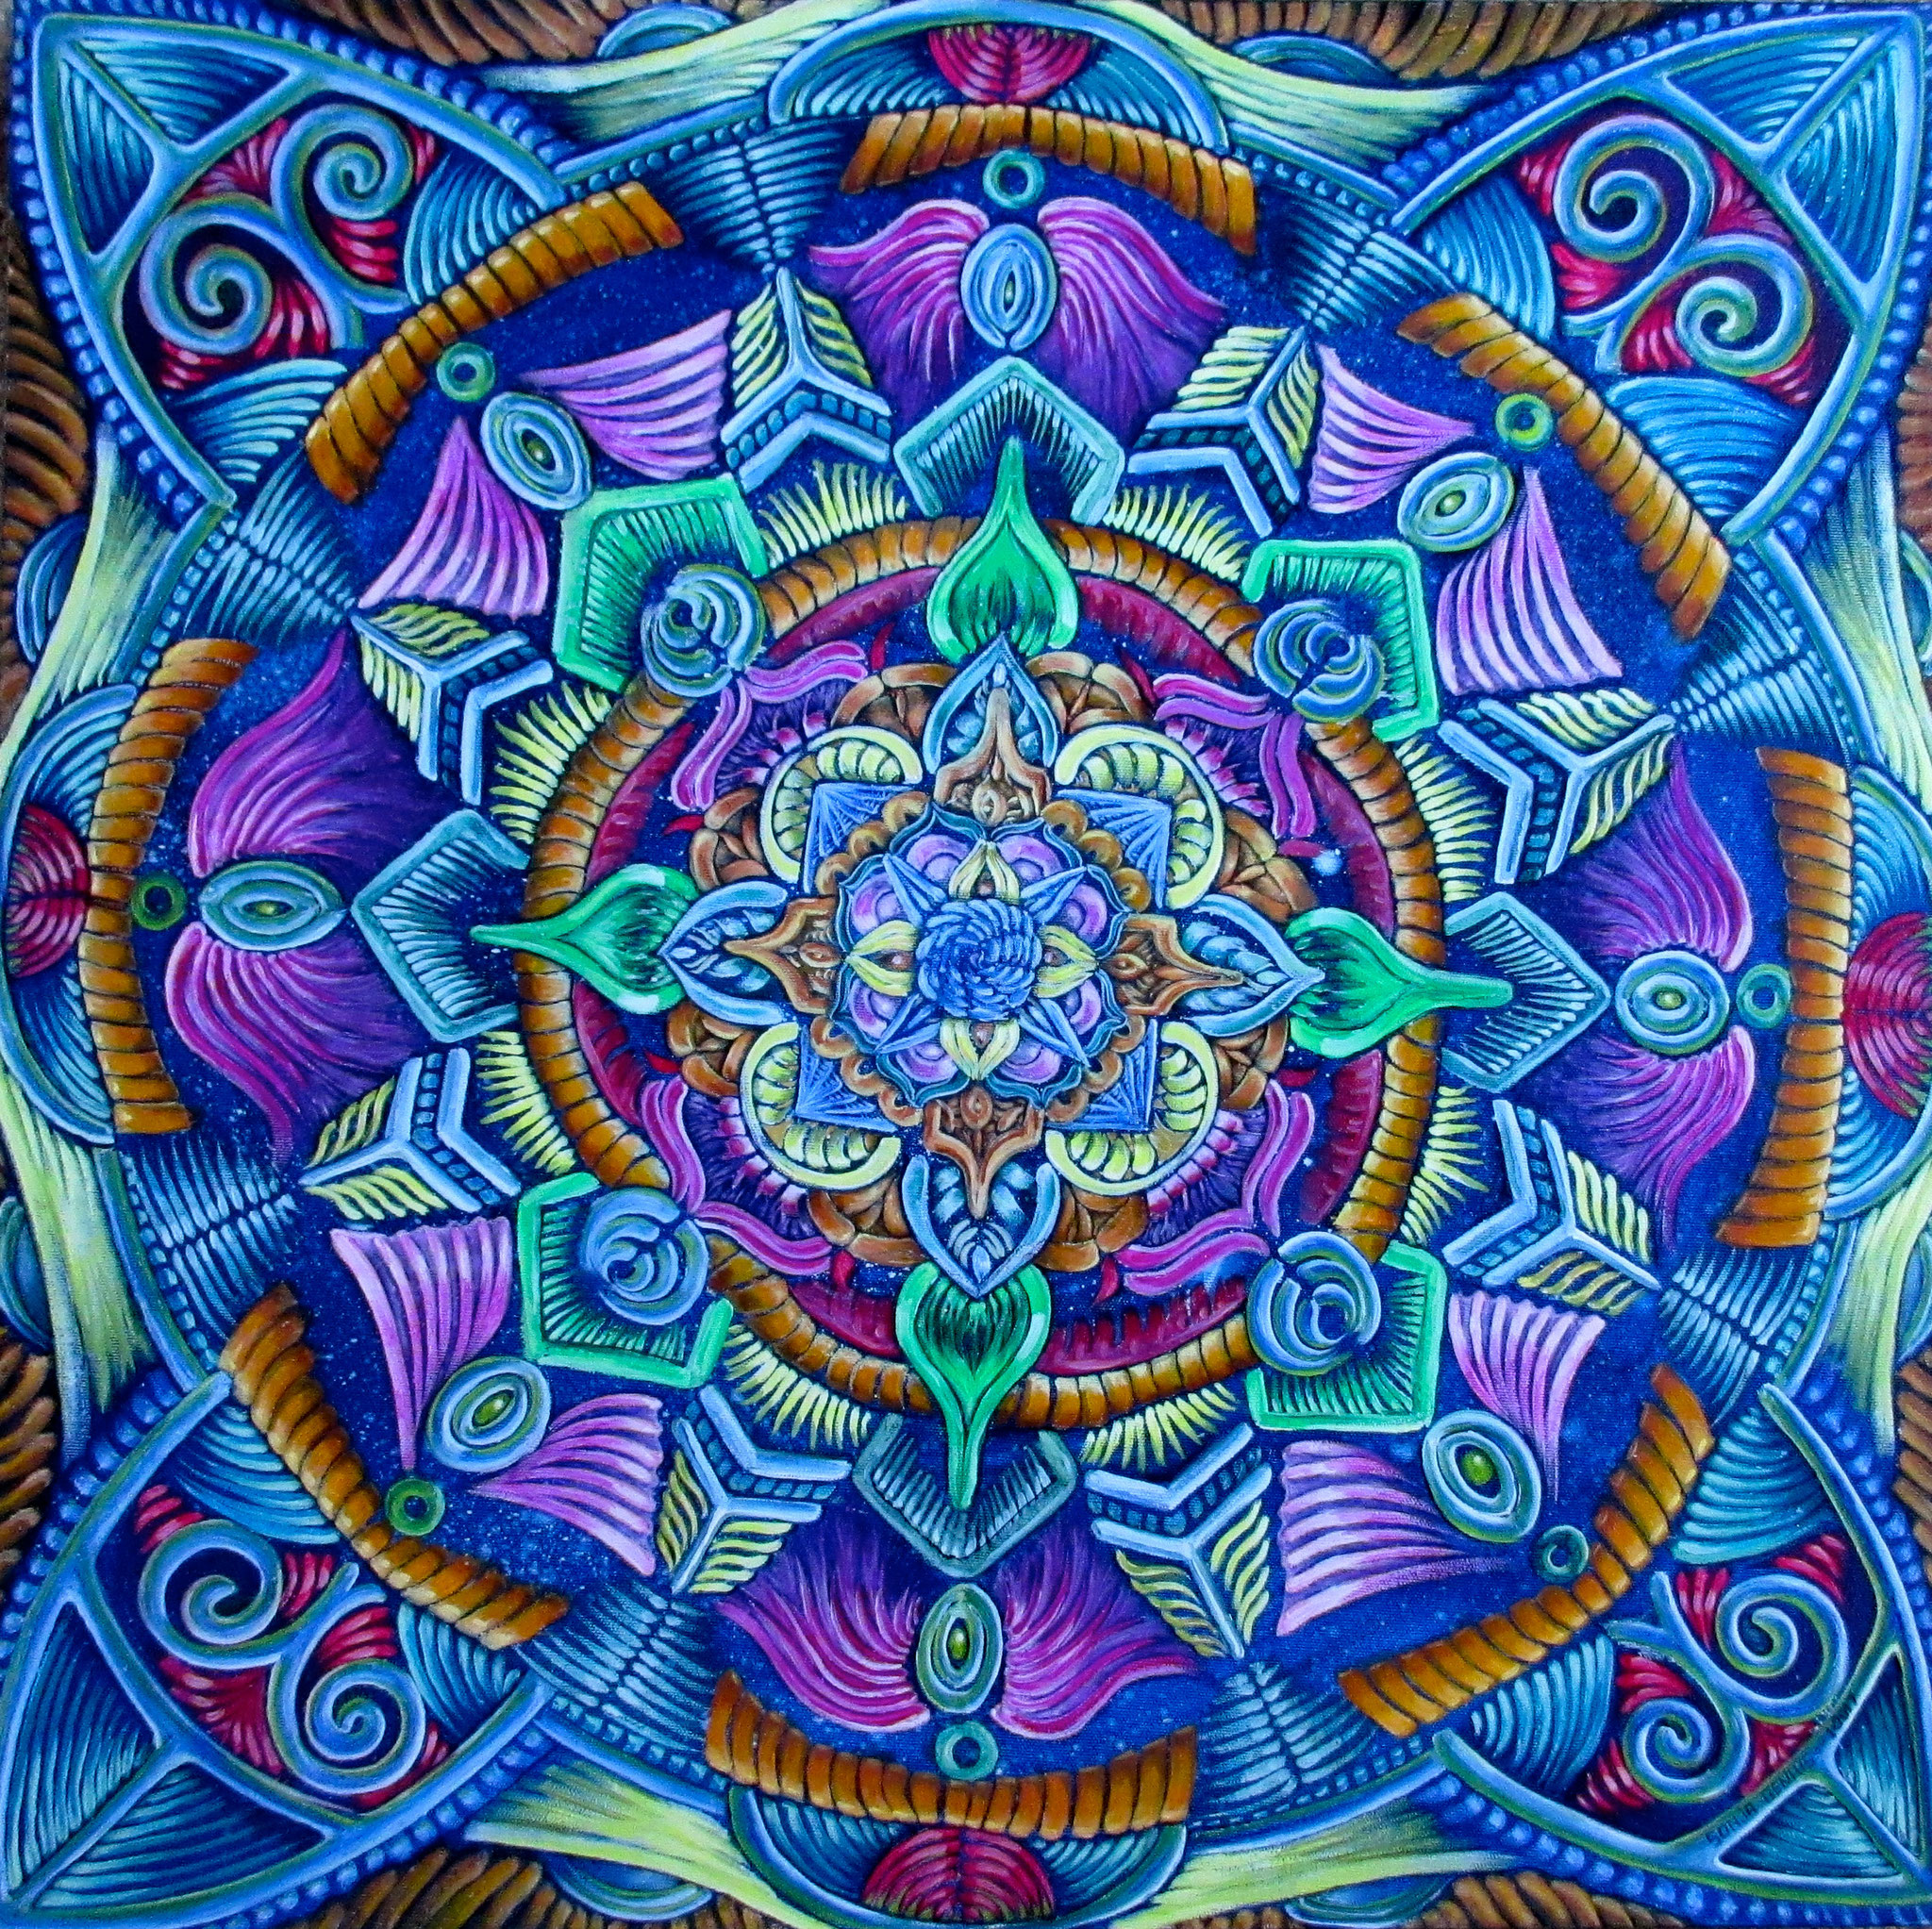 SOLD 6/17 - #425 - "Organic Mandala", acrylic/oil on canvas 24x24, 1/17